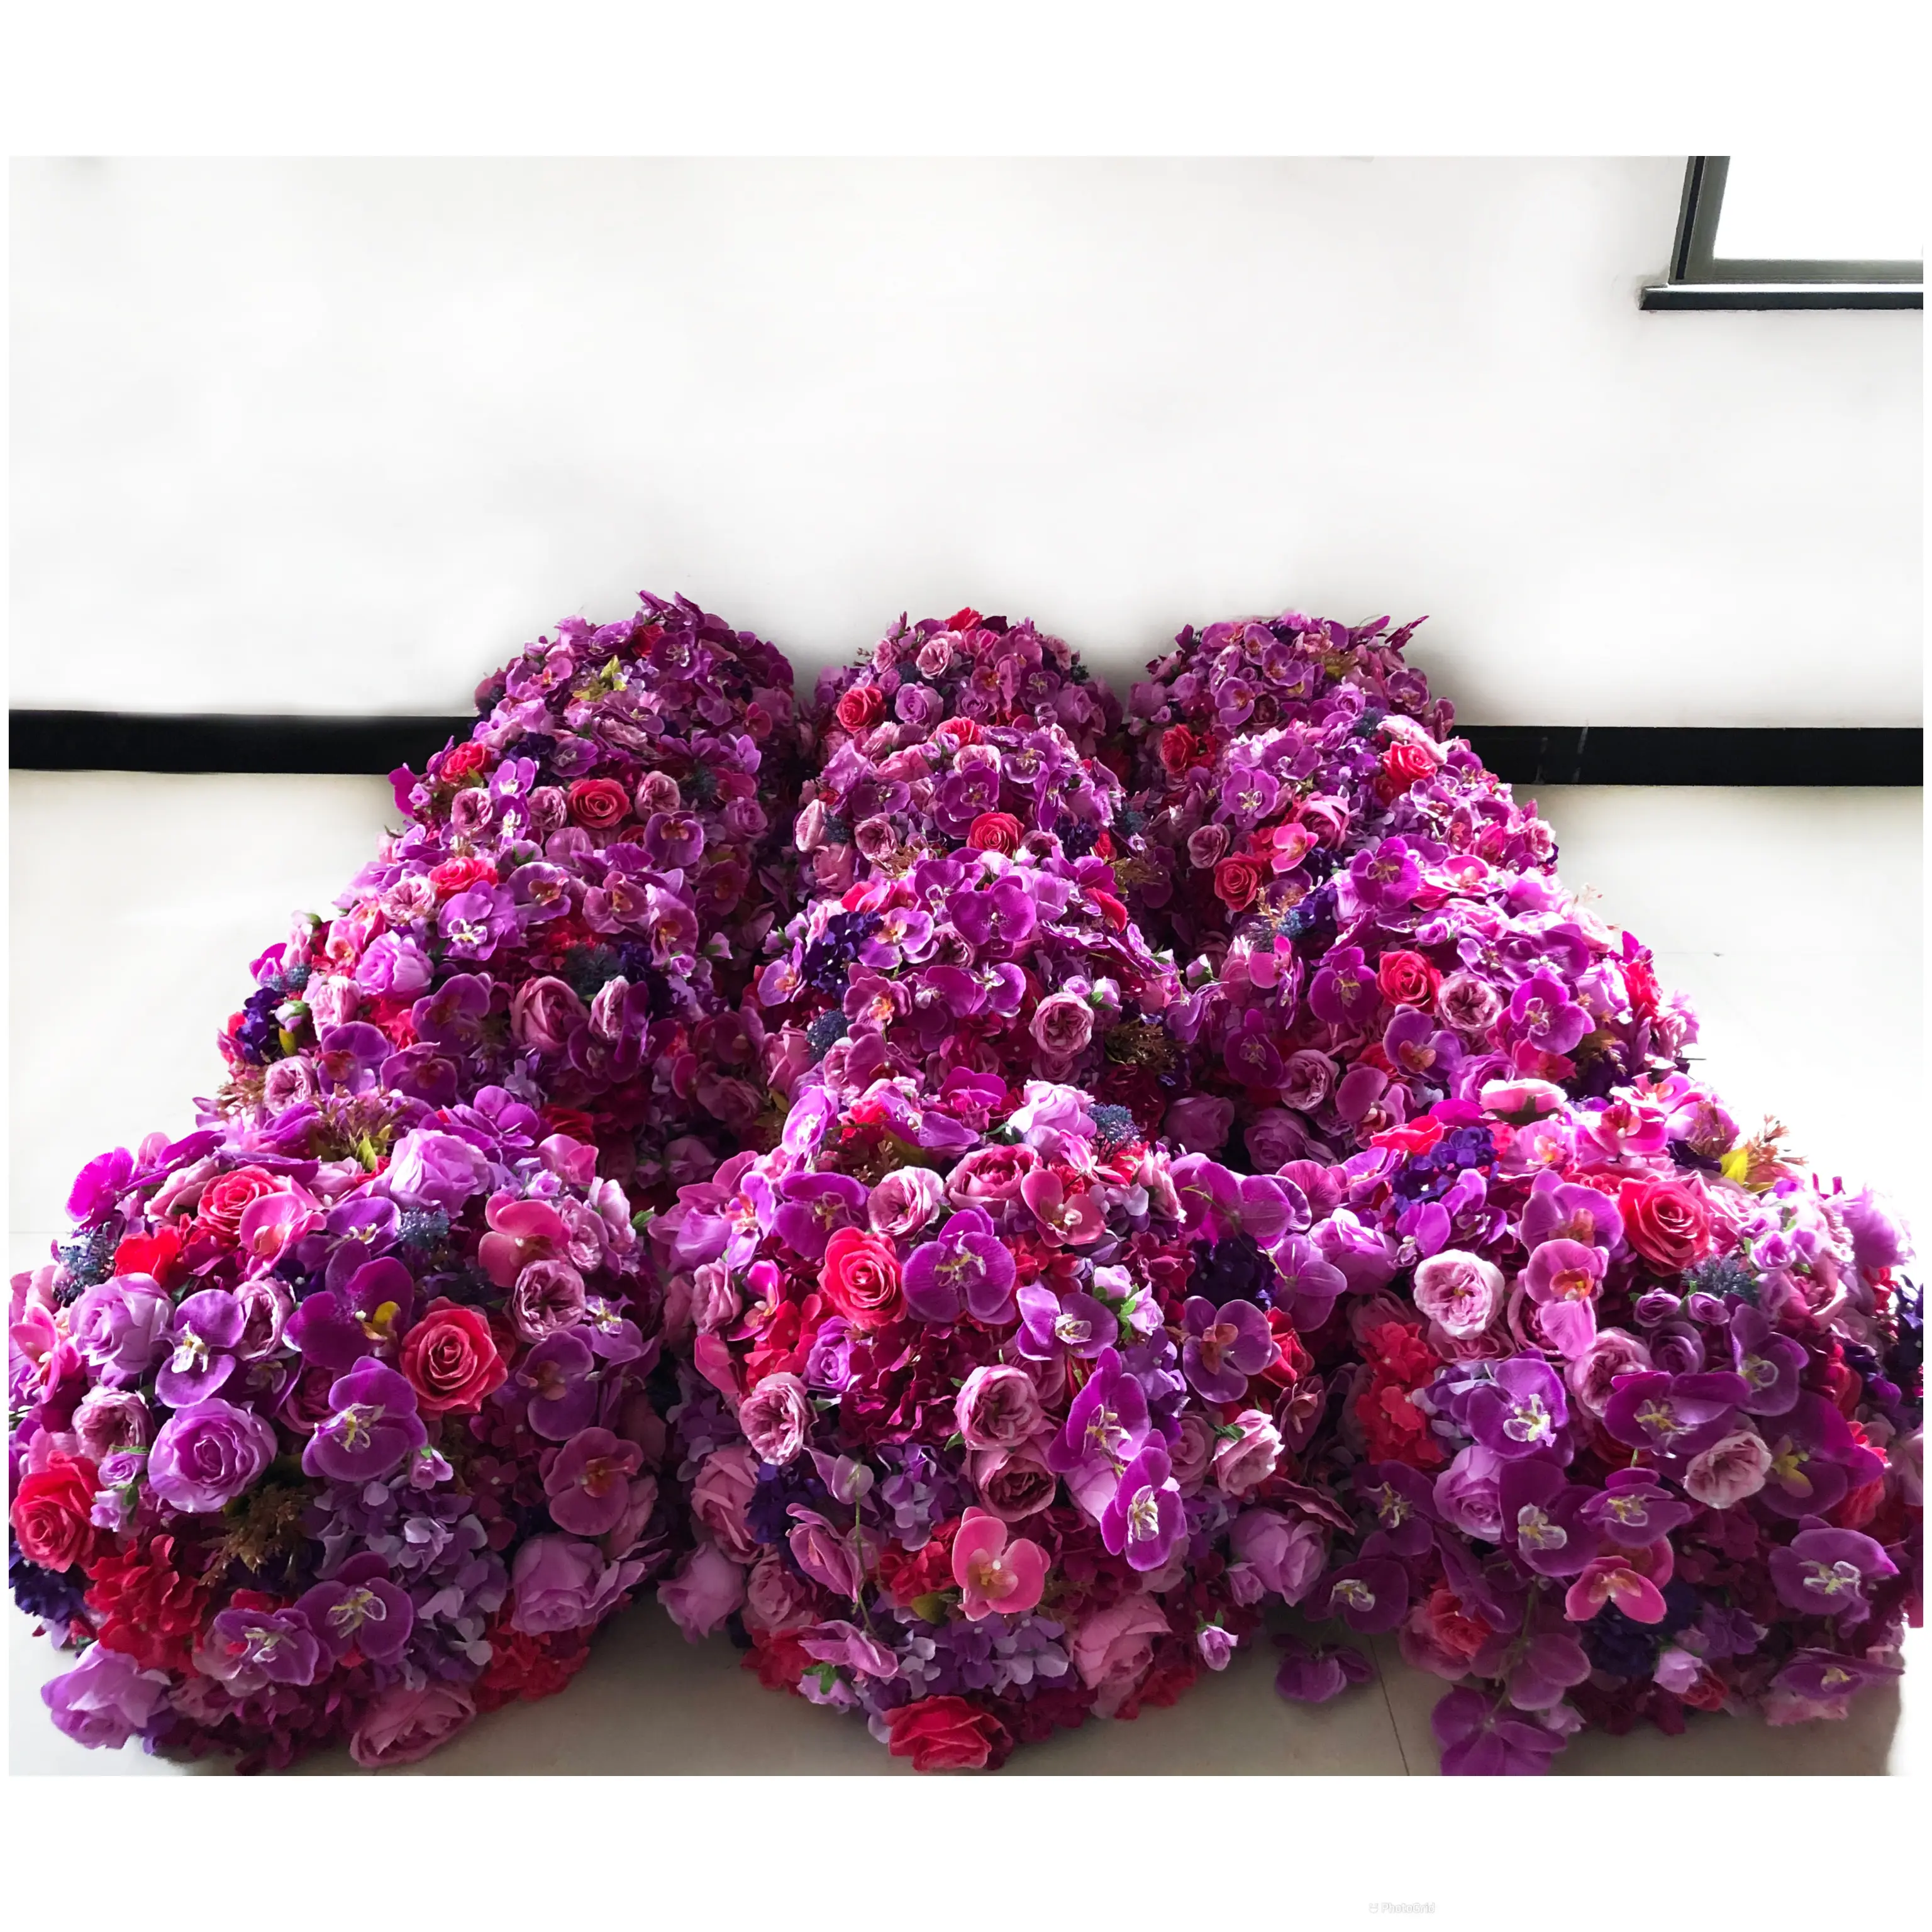 C20 Top quality flower ball wedding centerpieces red rose white purple flower ball artificial silk hydrangea flower ball